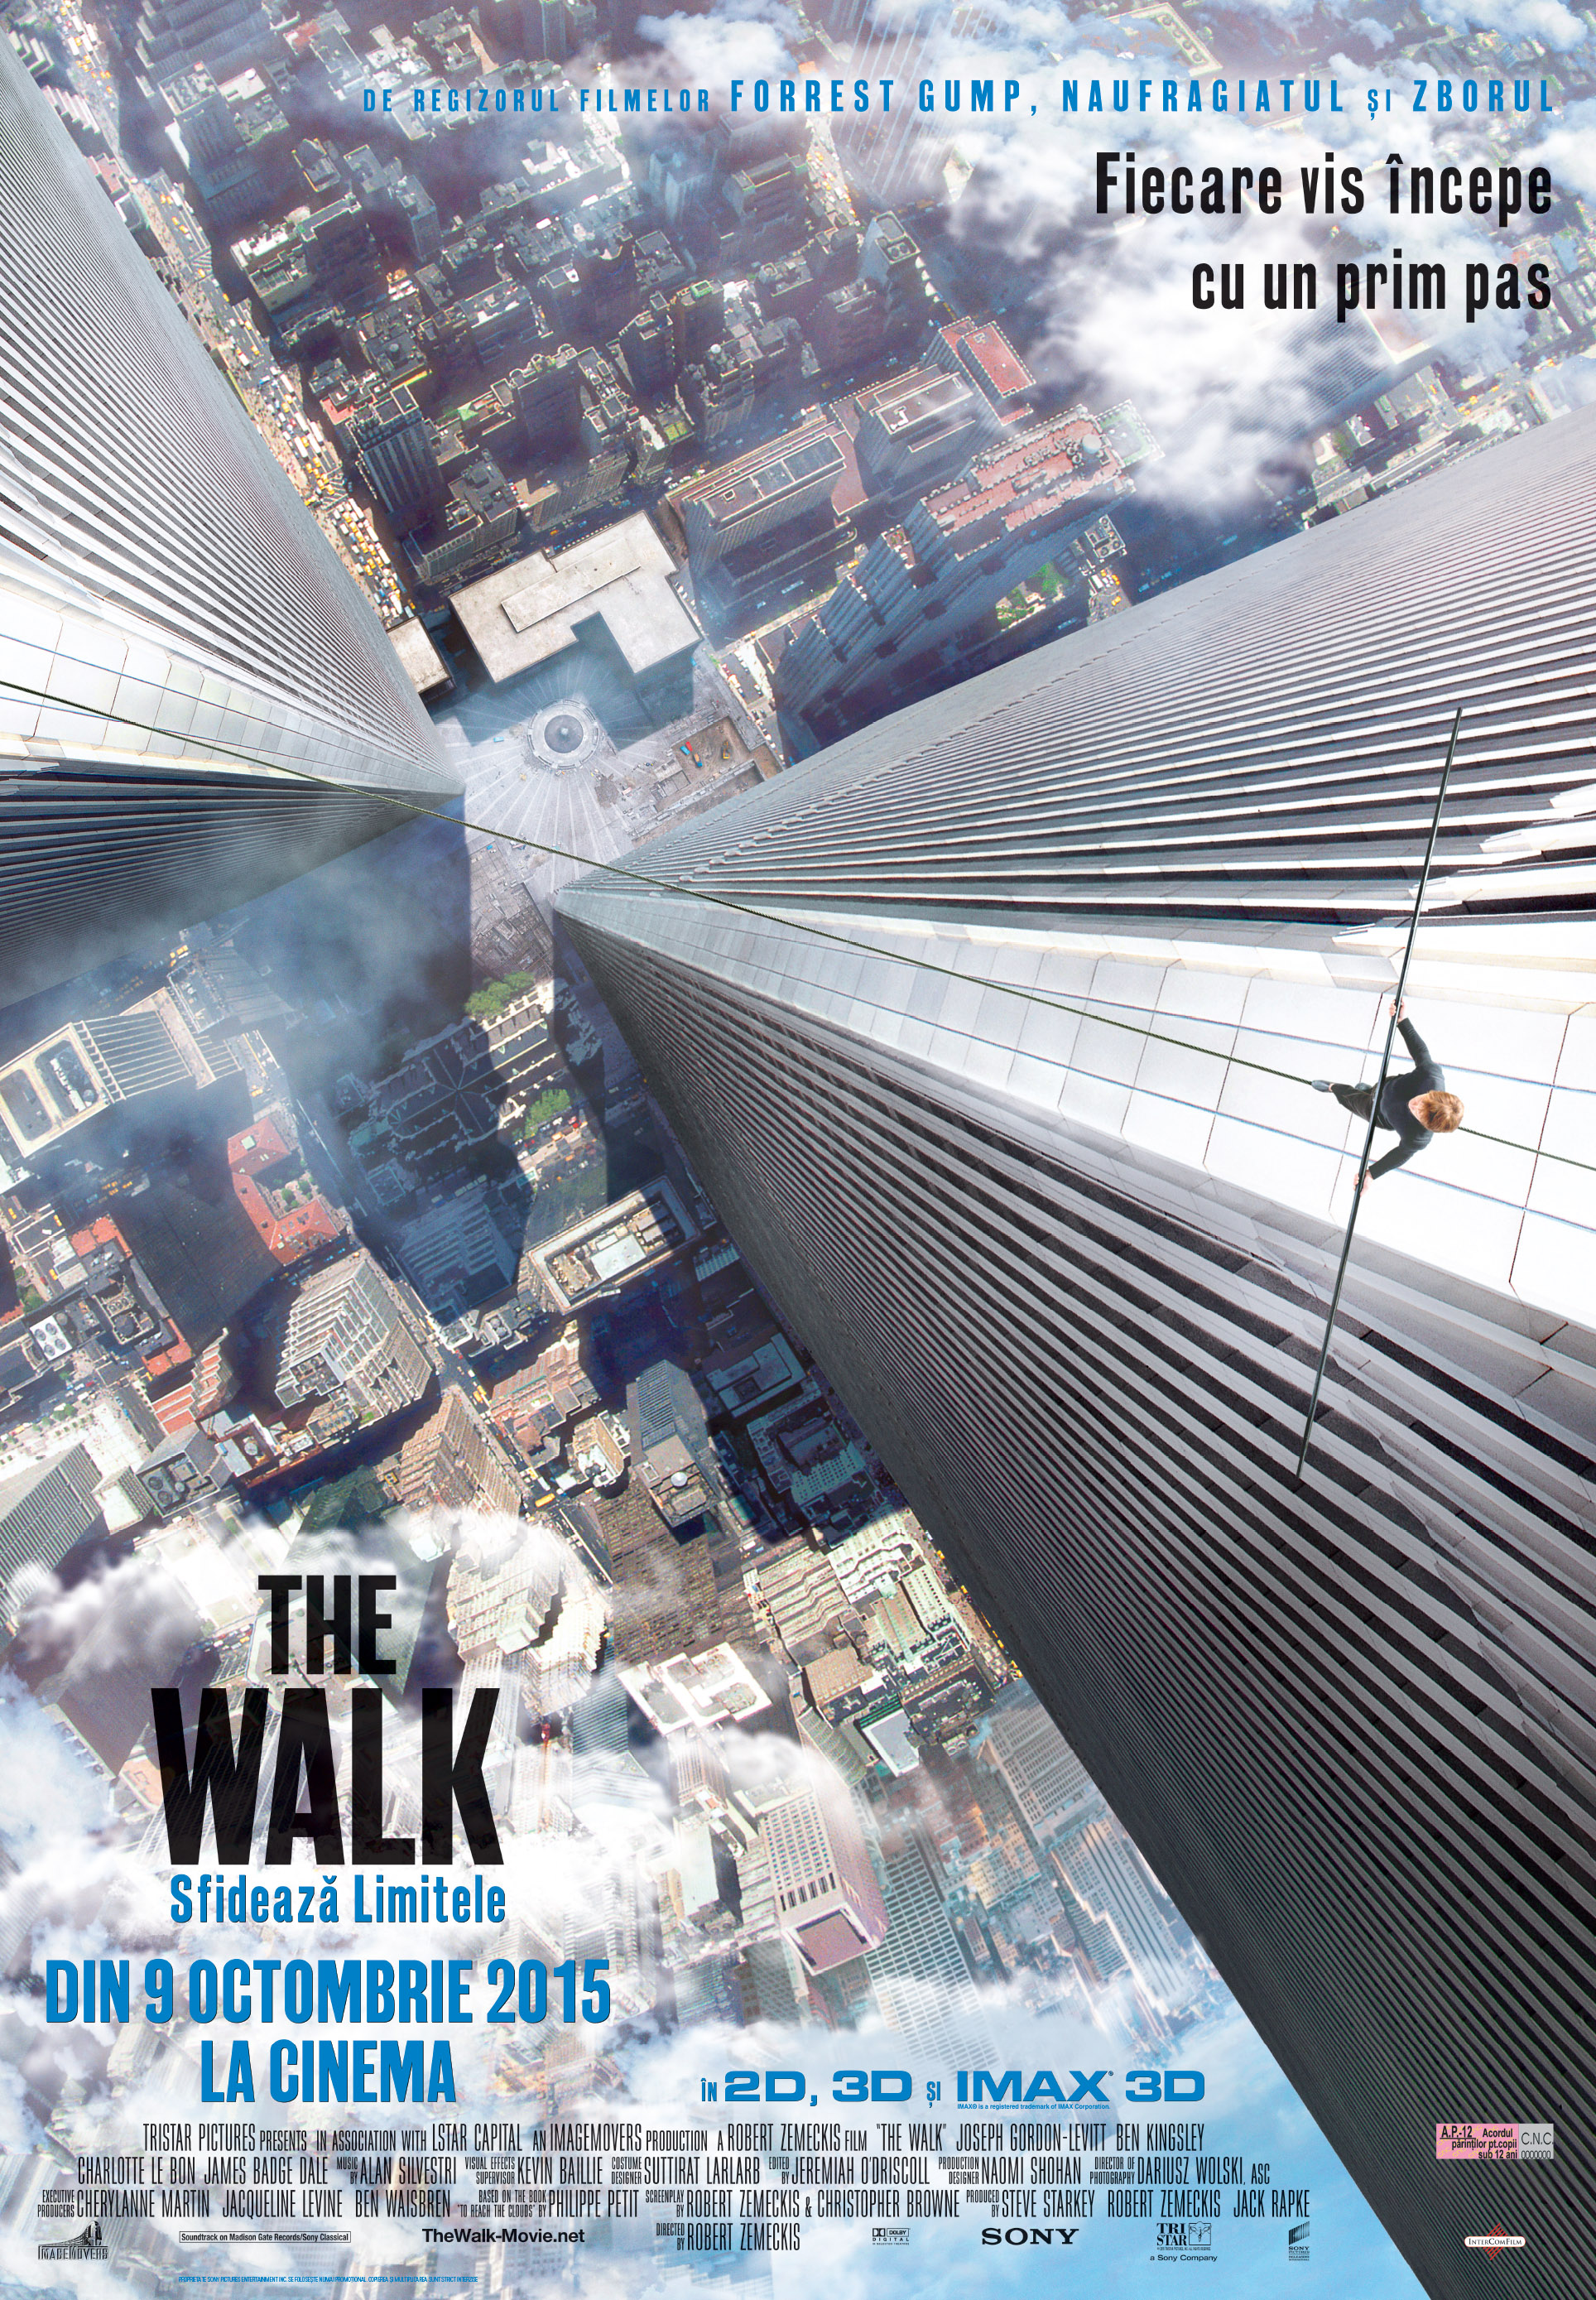 The Walk: Sfideaza limitele – 3D (Premiera) 